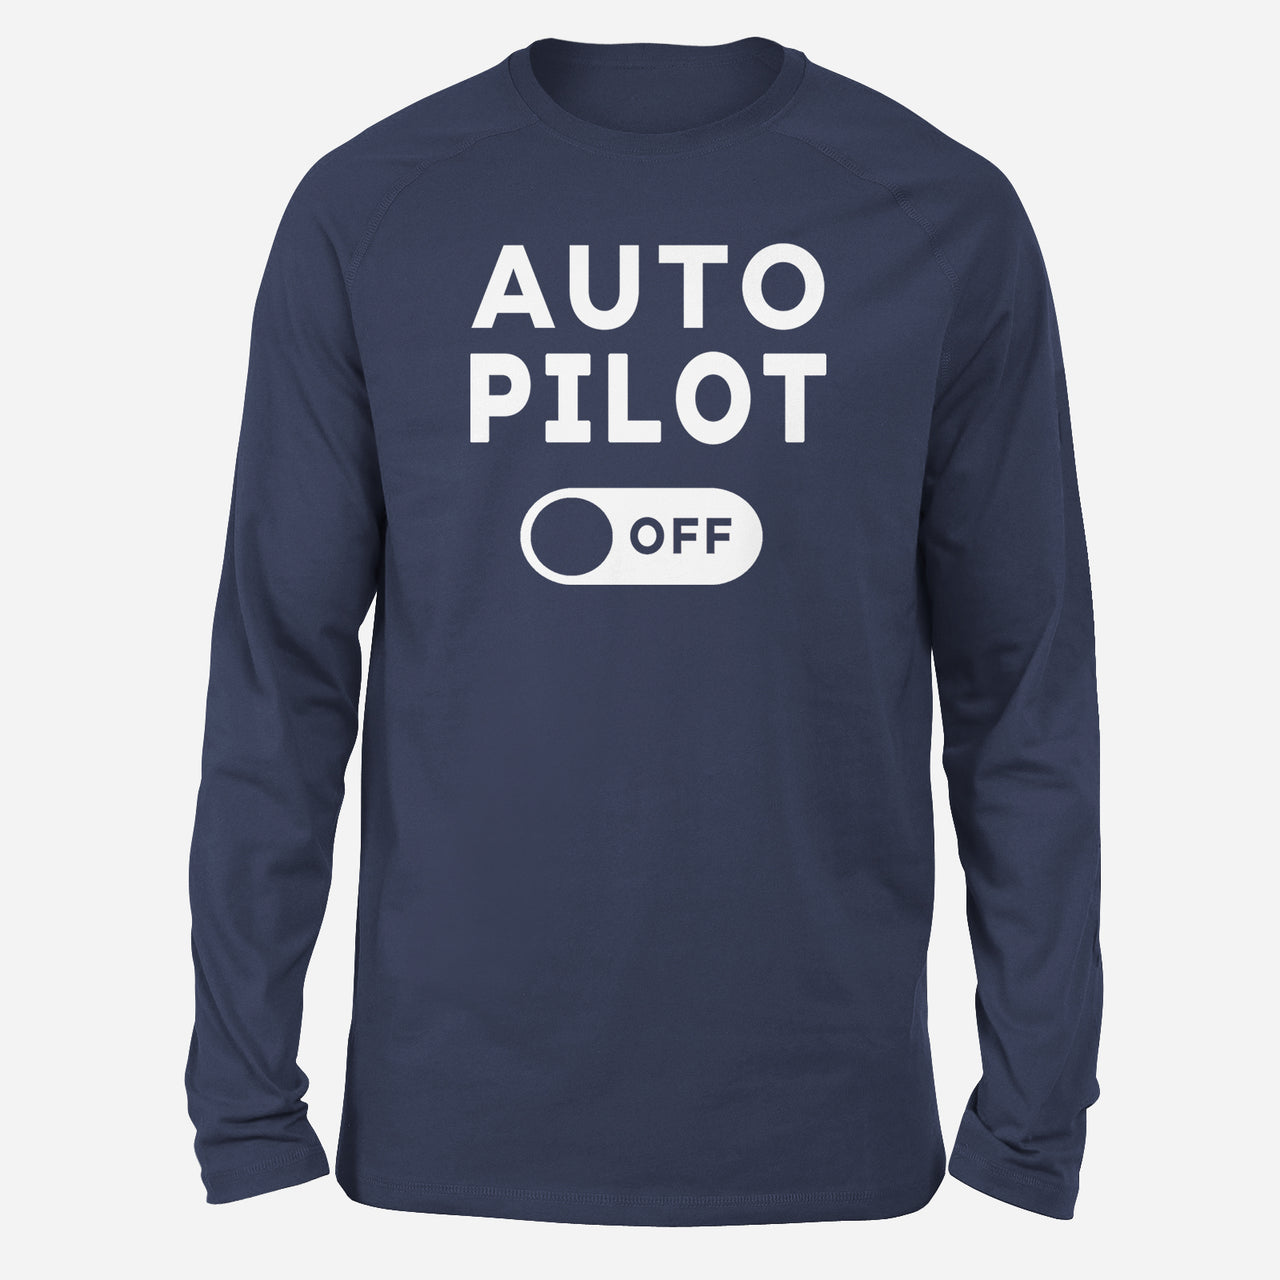 Auto Pilot Off Designed Long-Sleeve T-Shirts